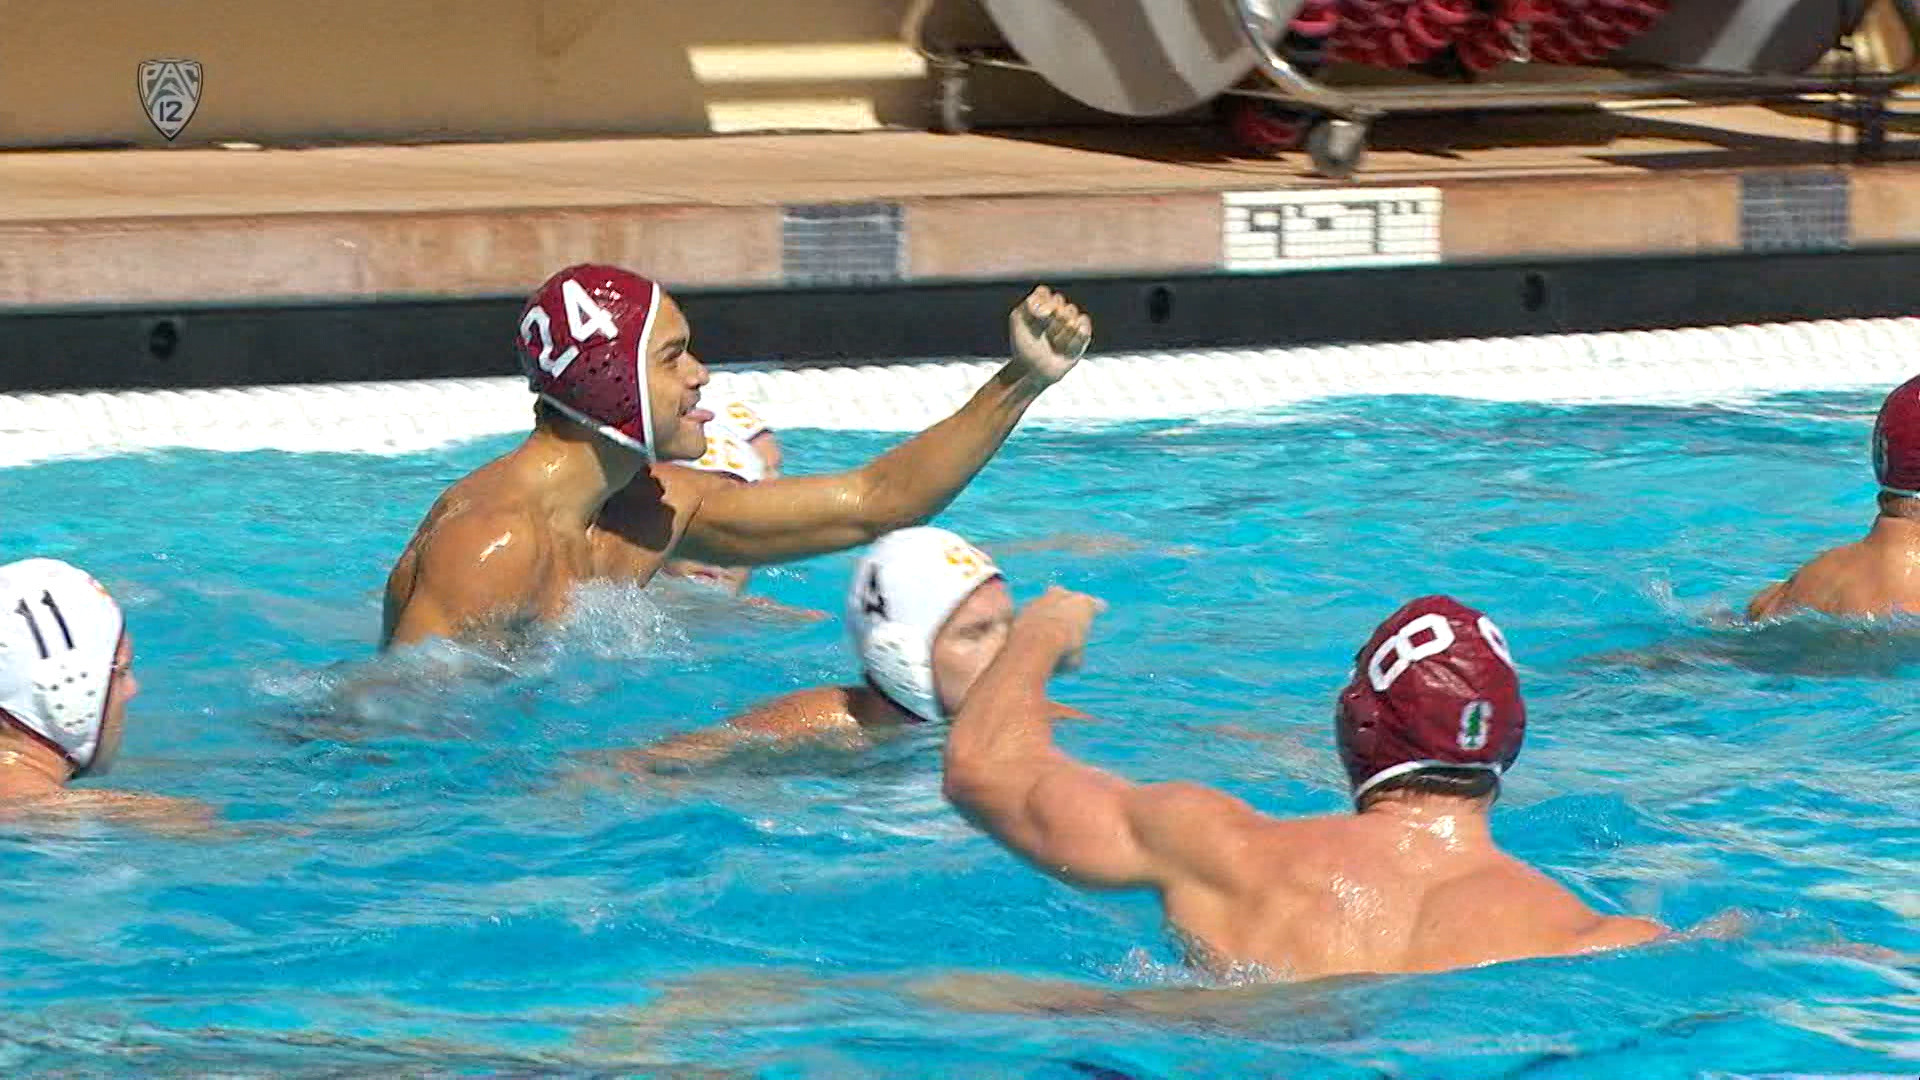 1920x1080 USC Trojans vs Stanford Cardinal Men's Water Polo - Septembe...